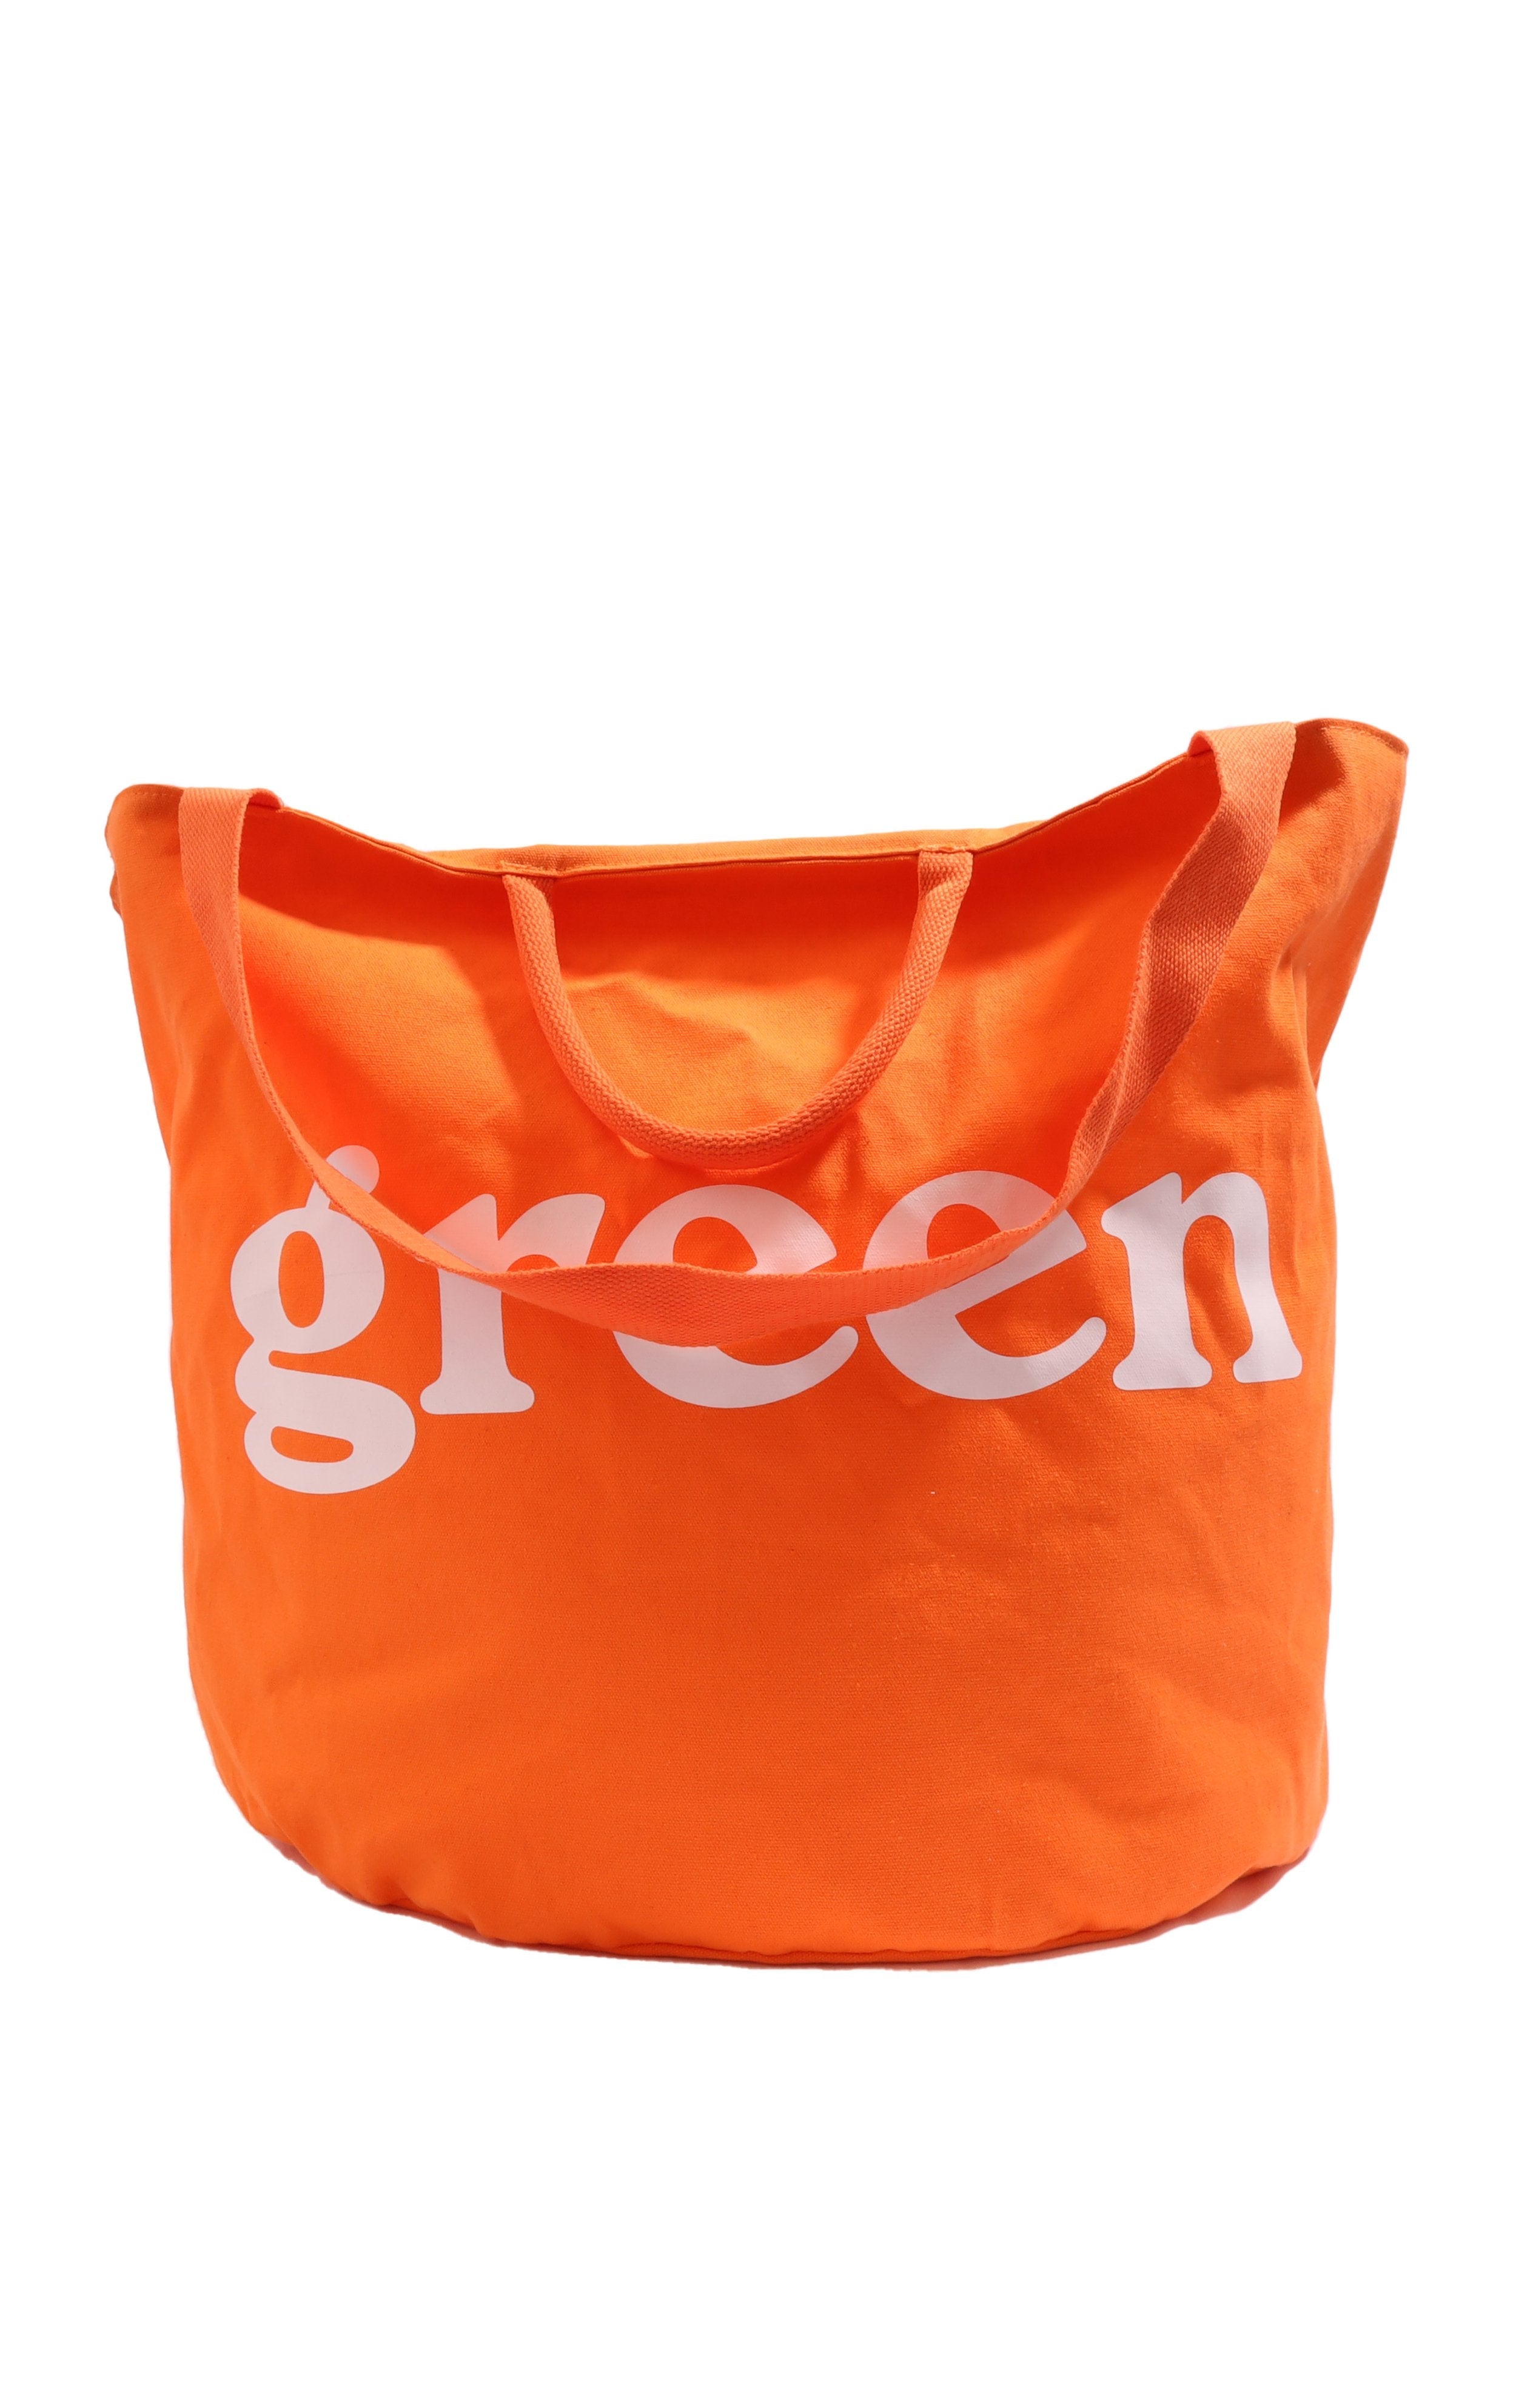 Large Round Tote / Grow Bag - Orange-Mister Green-Mister Green